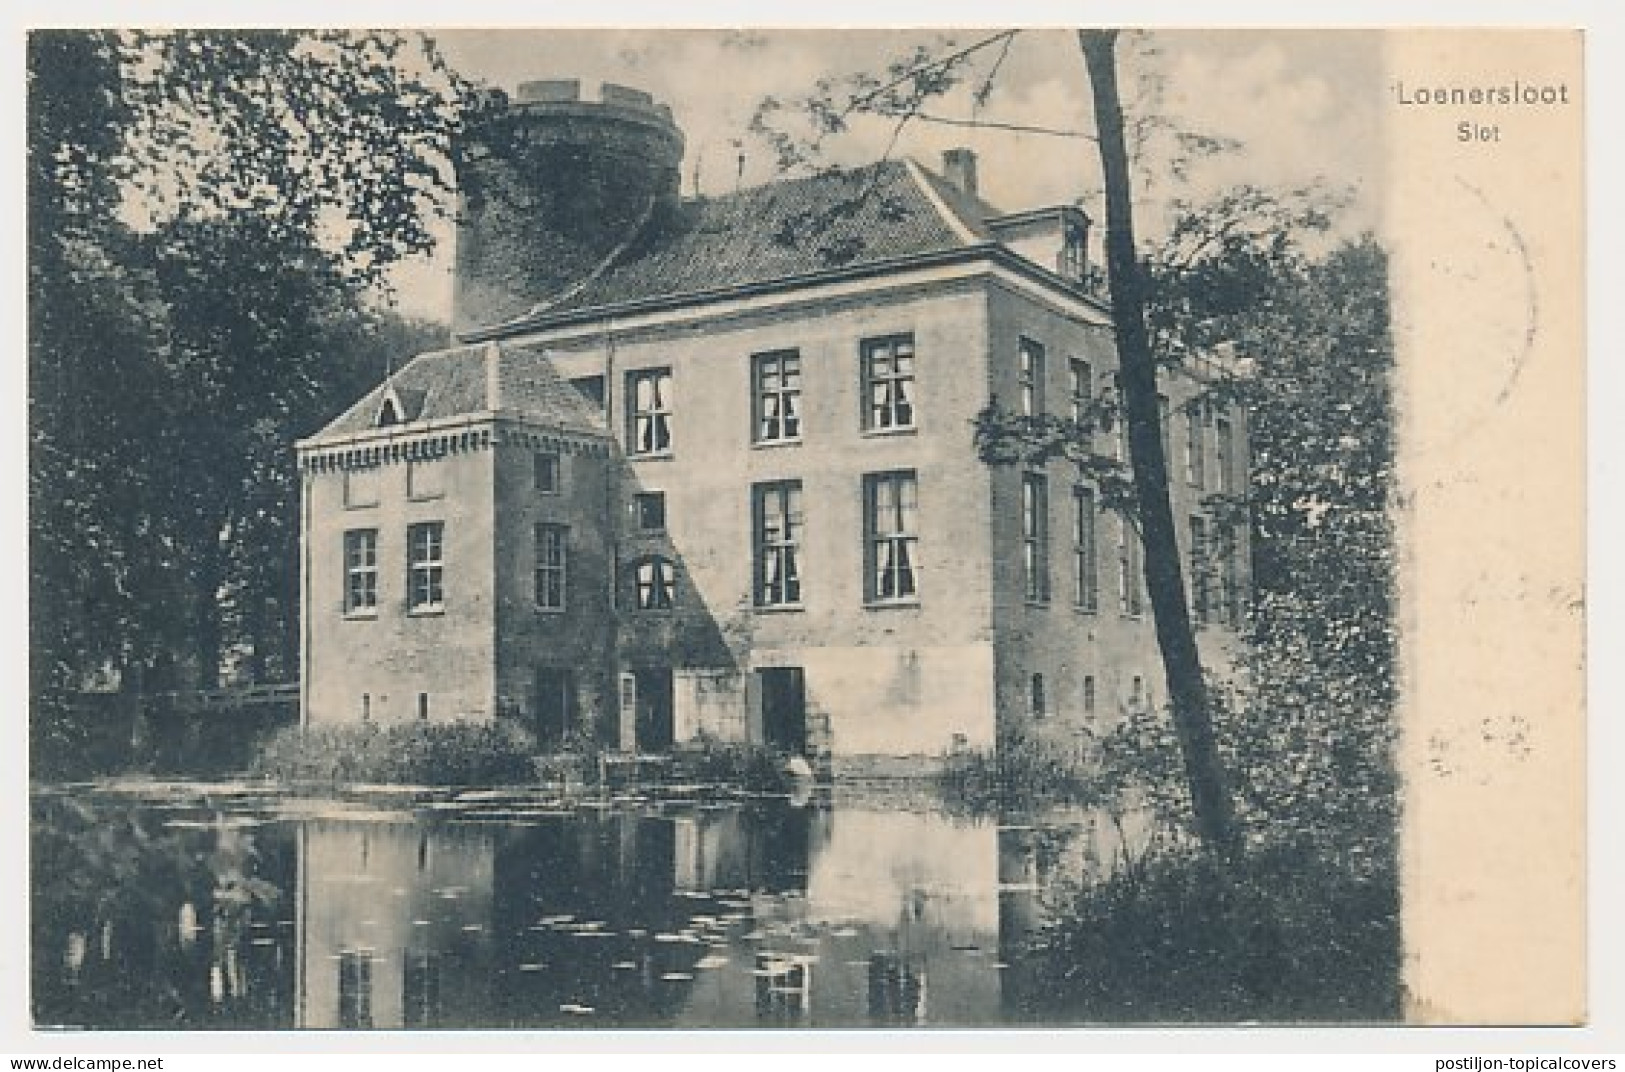 Kleinrondstempel Loenersloot 1908 - Unclassified